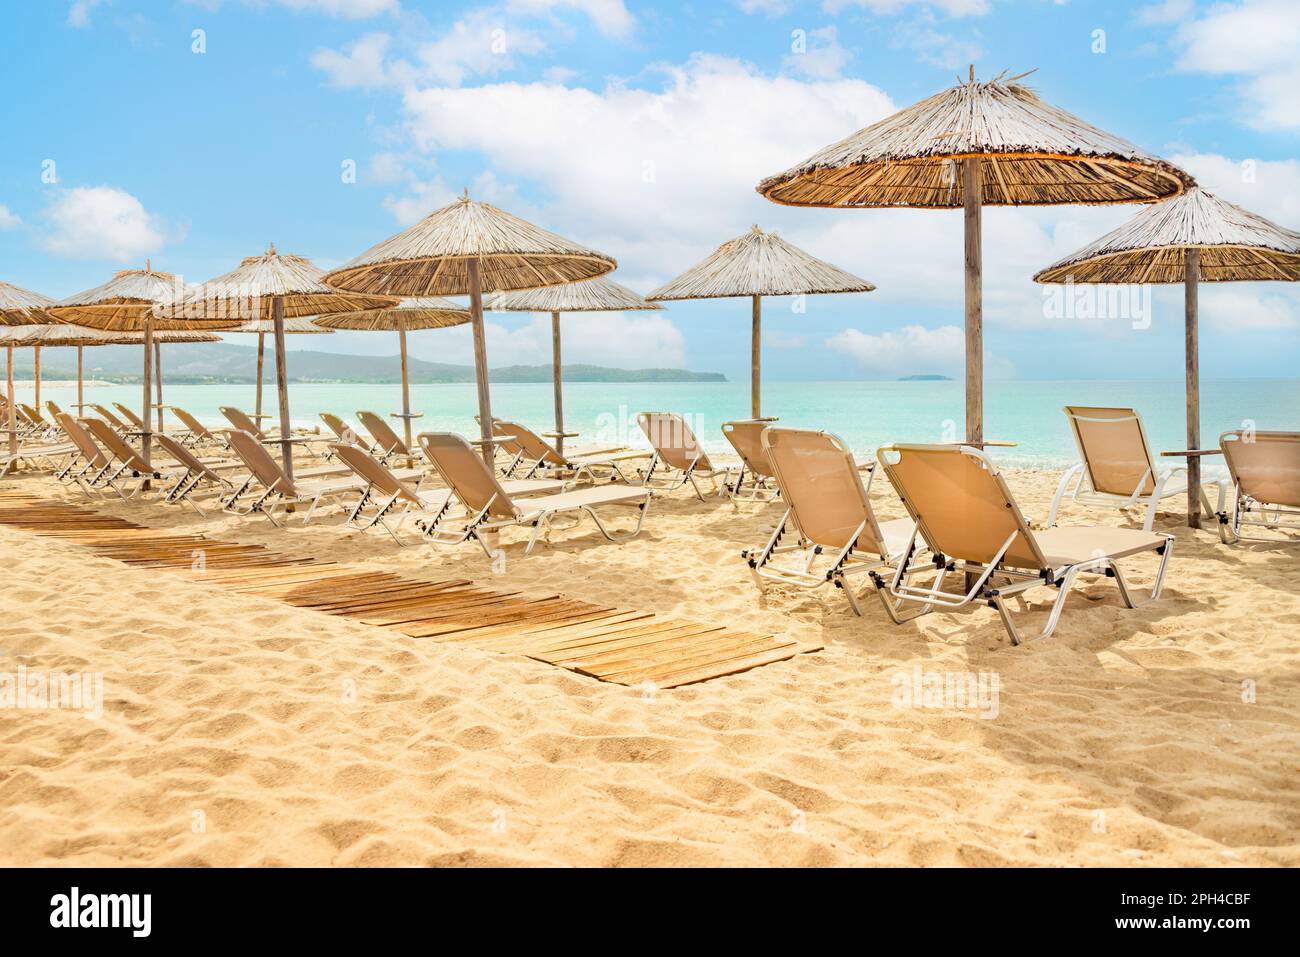 Straw umbrellas and sunbeds on a sunny golden tropical beach seashore. Stock Photo